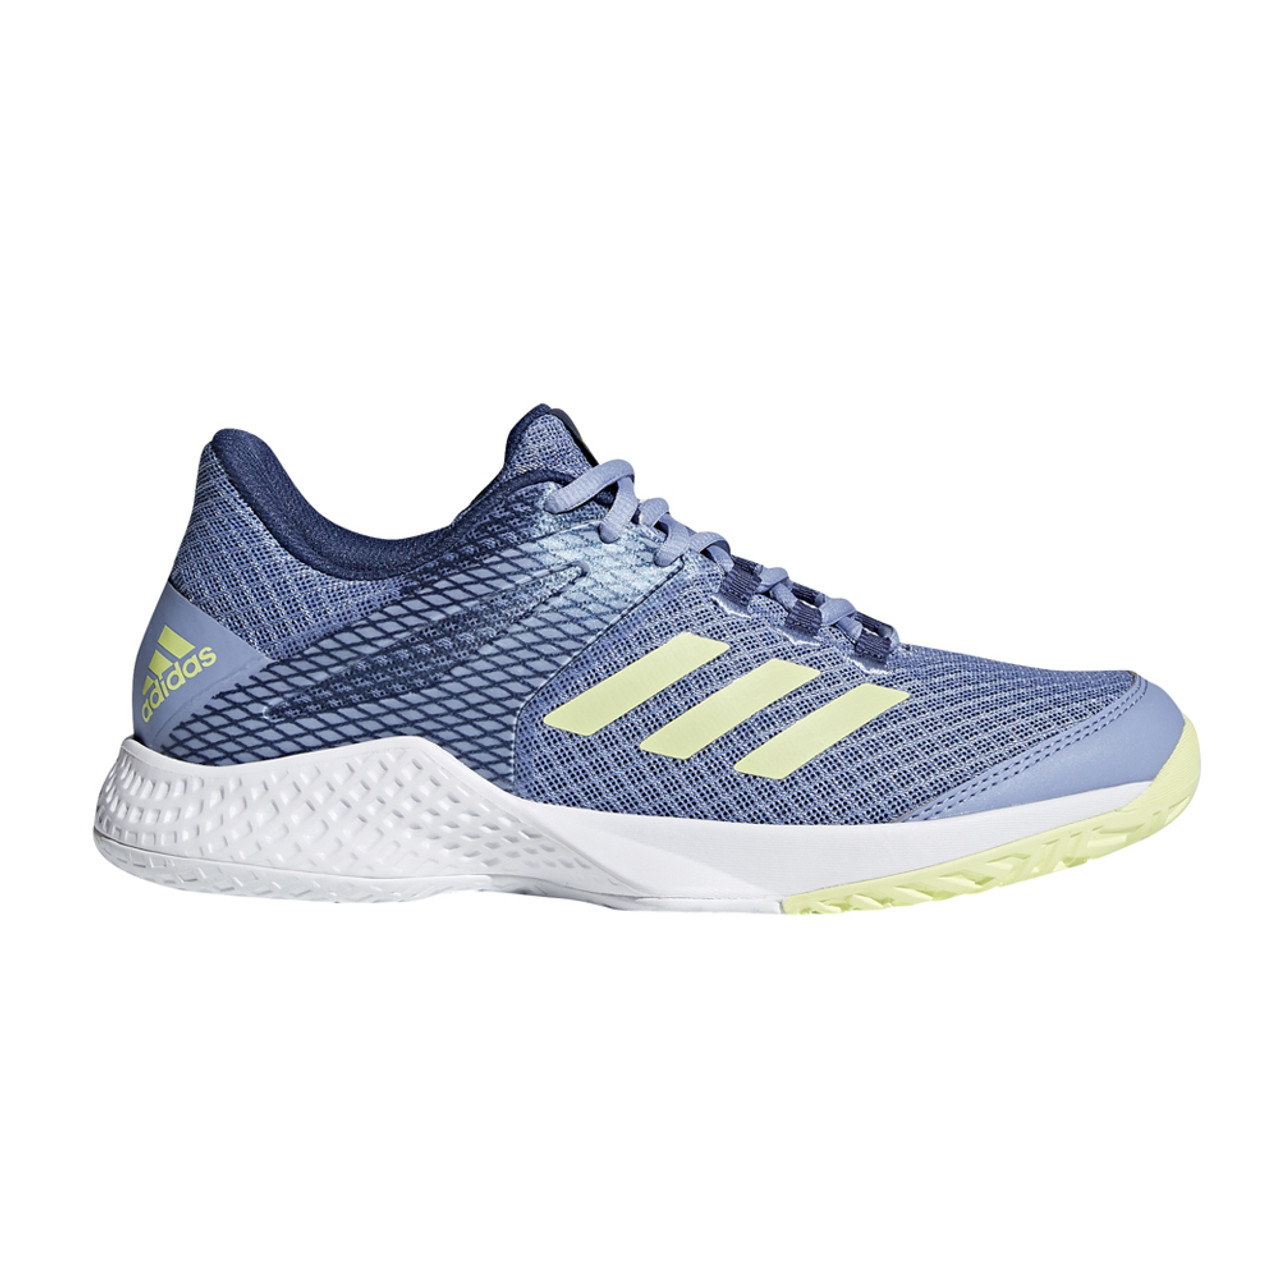 Adidas Women's Adizero Club Tennis Shoe - Blue | Discount Adidas Ladies  Athletic Shoe & More  